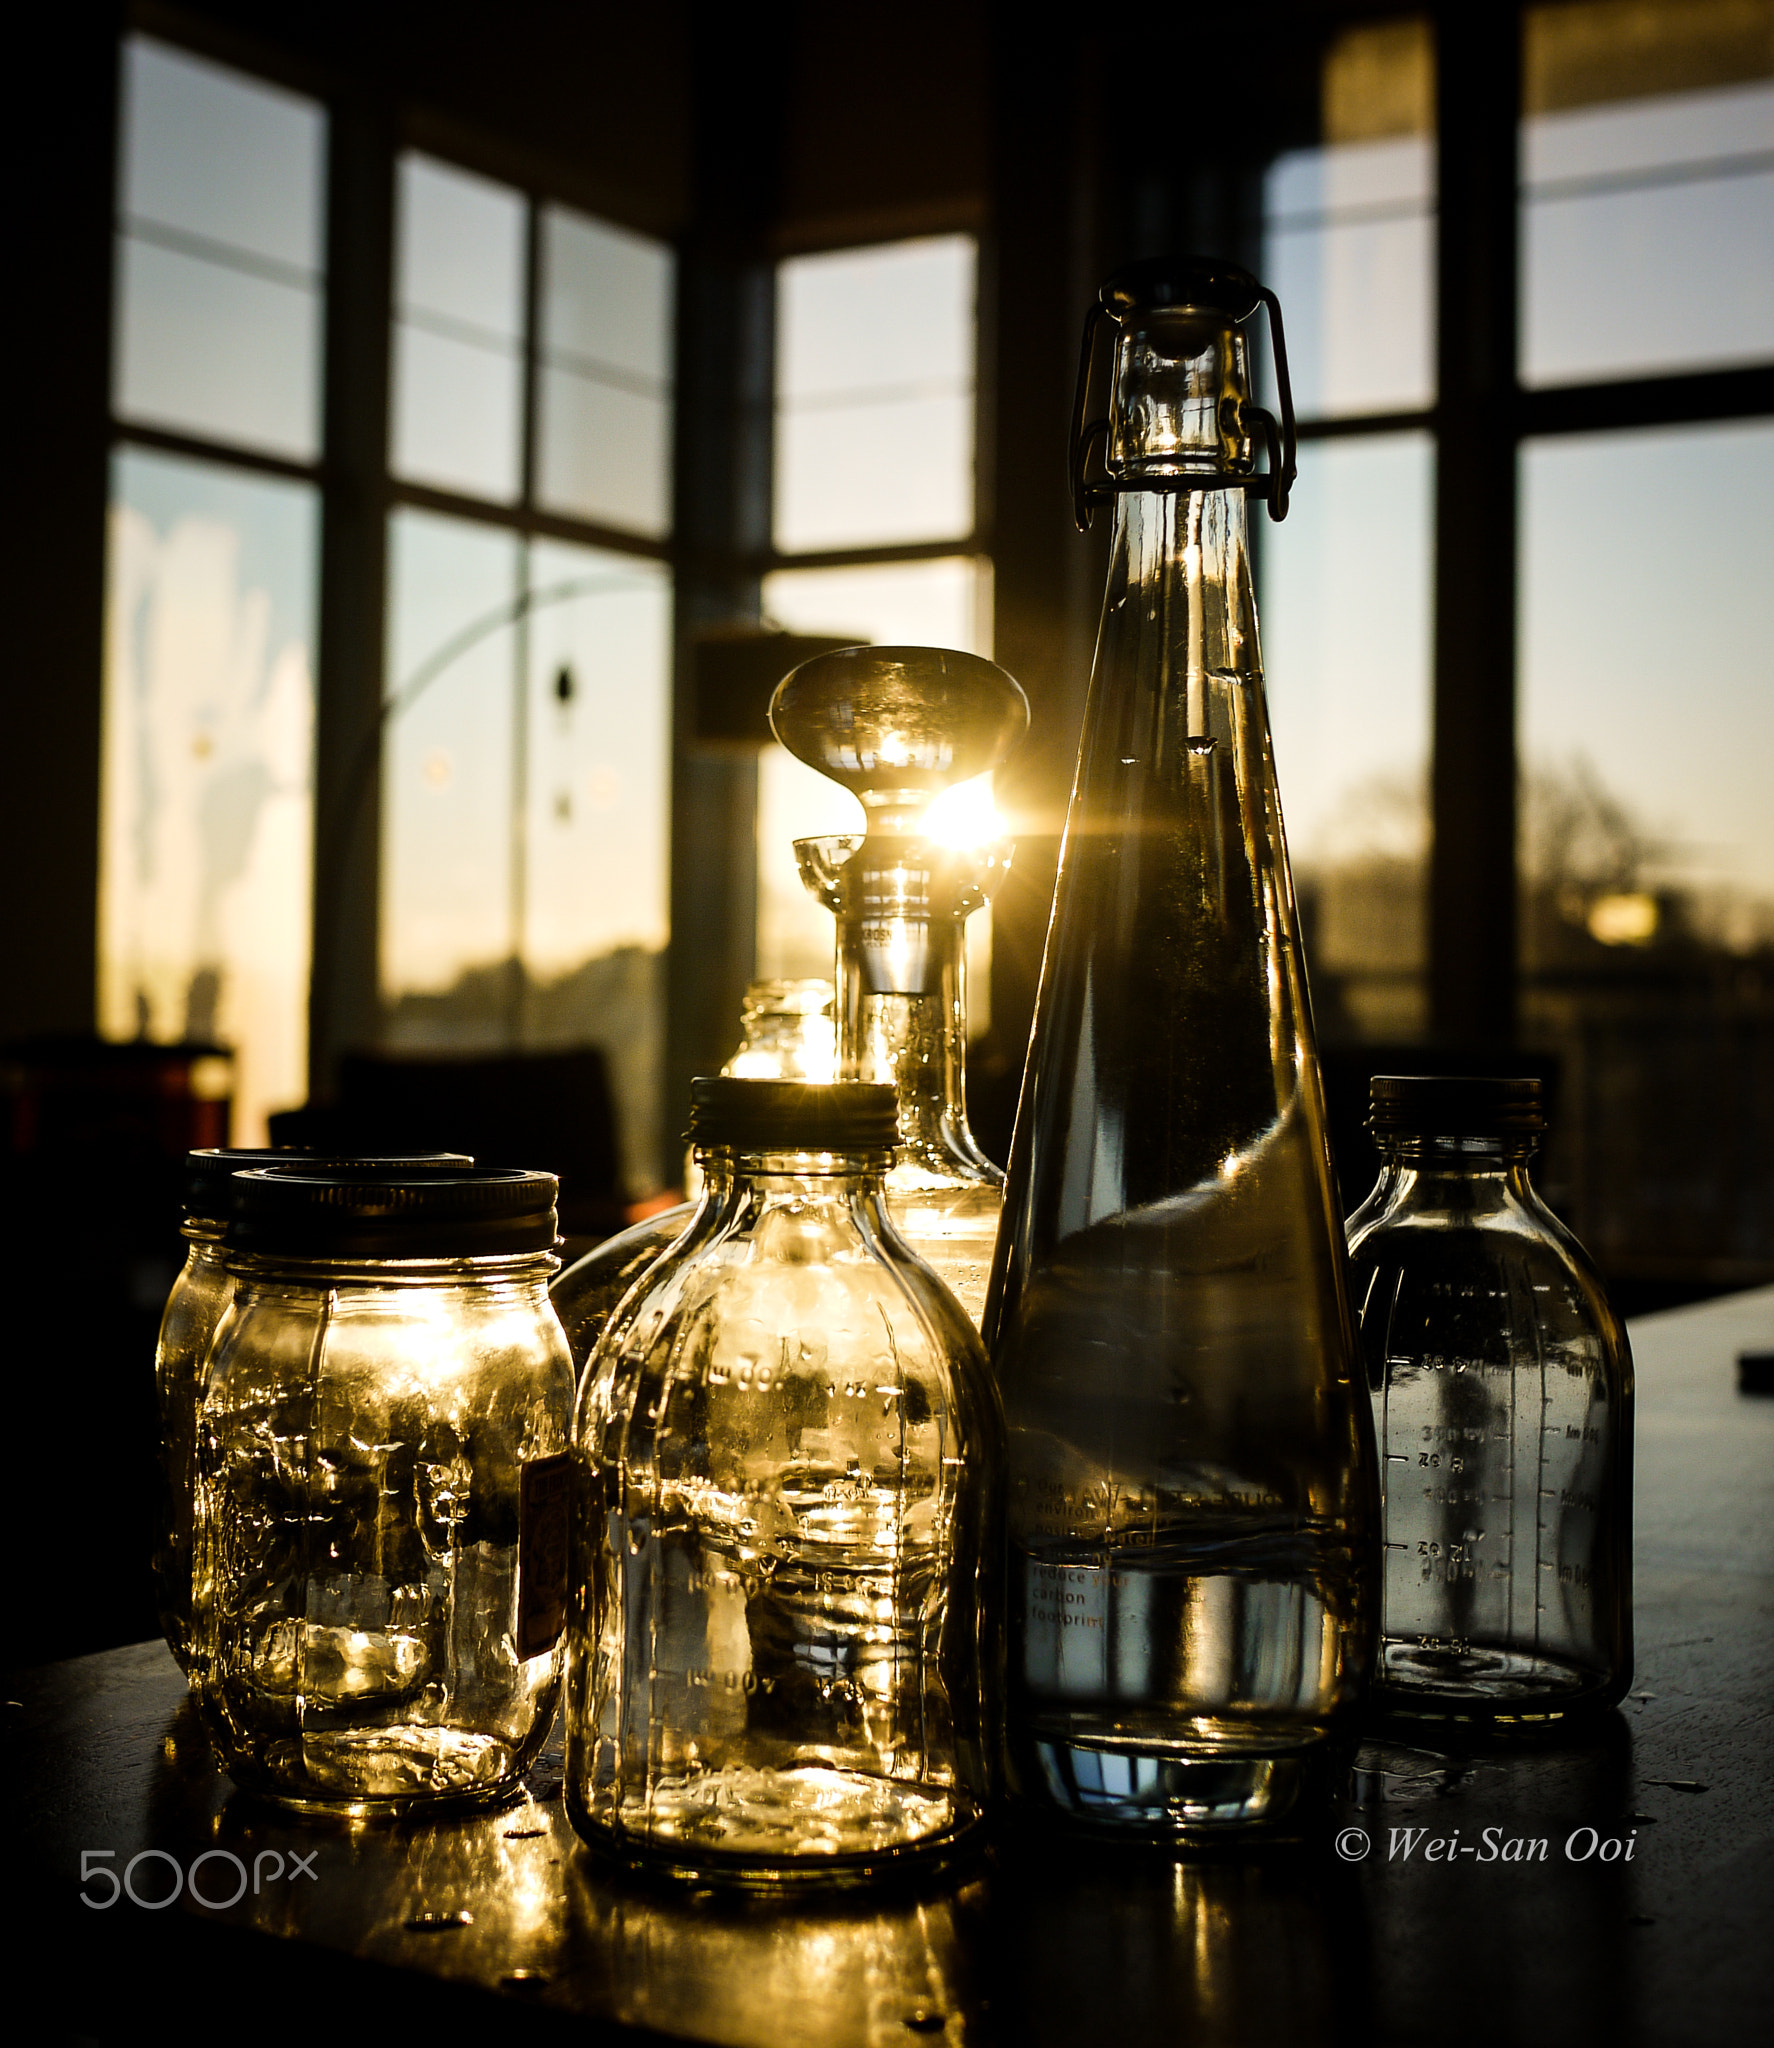 Golden bottles and mason jars